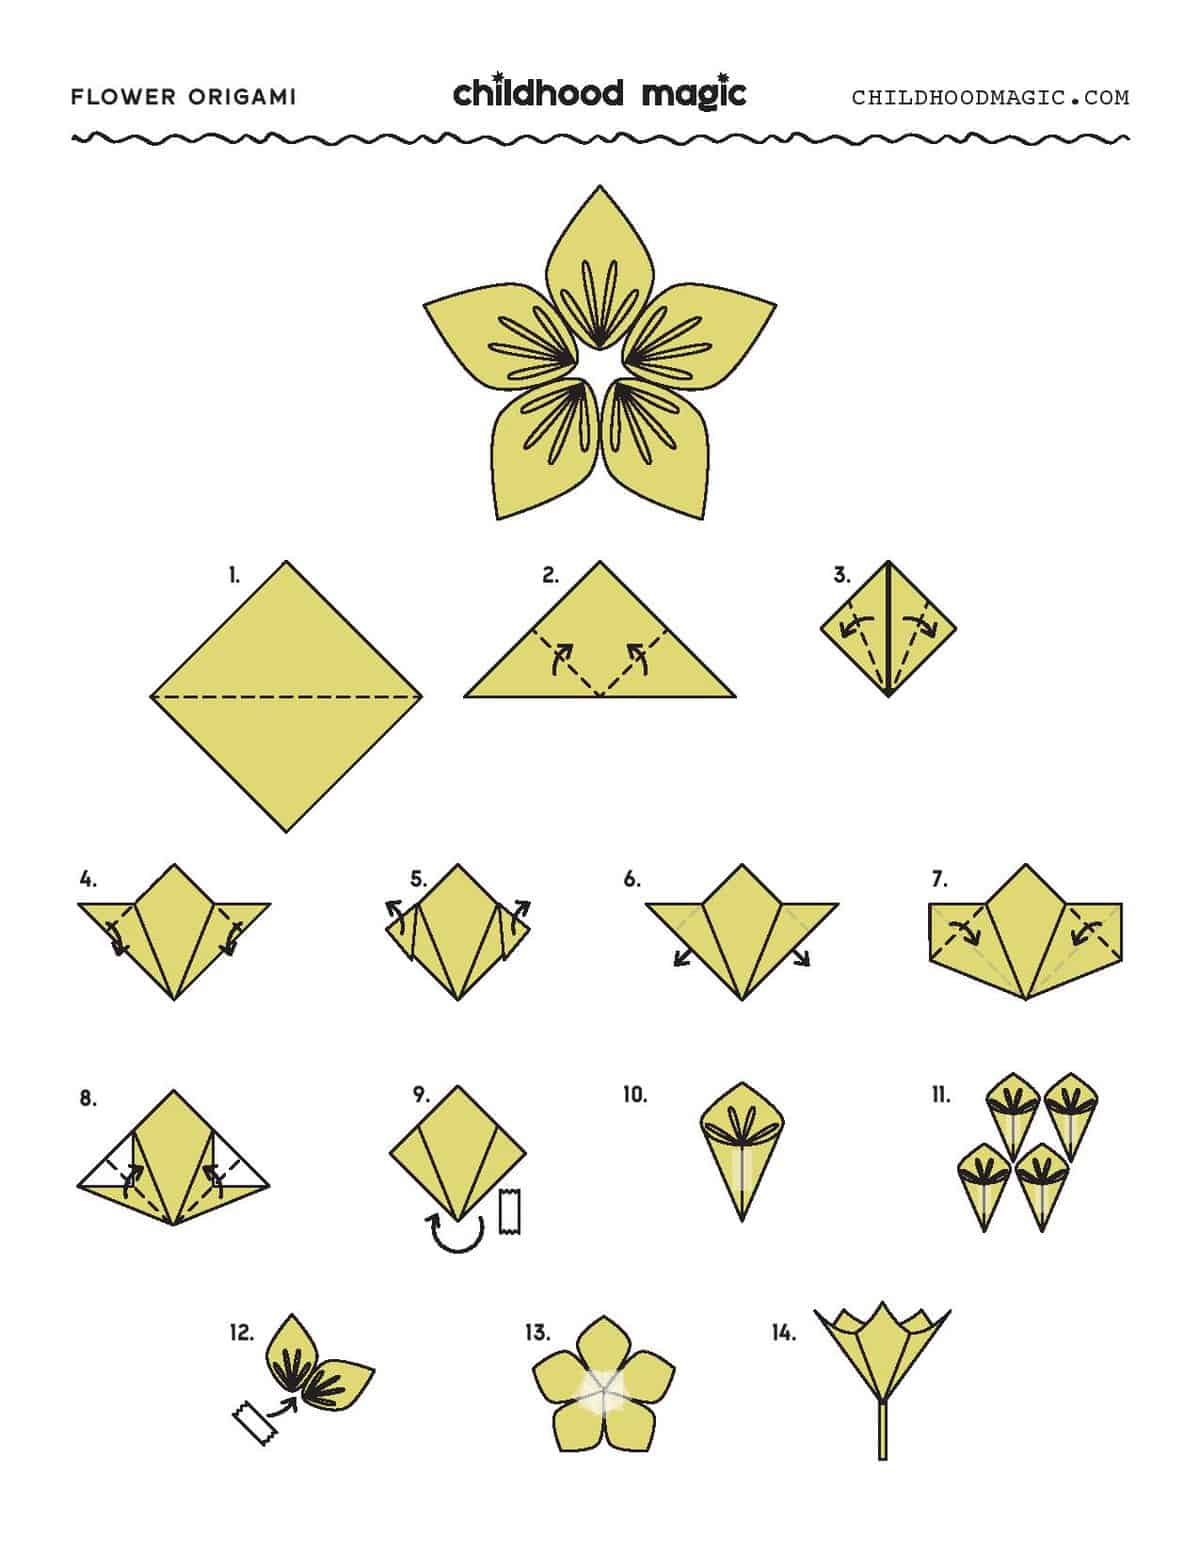 Origami Flower - Childhood Magic